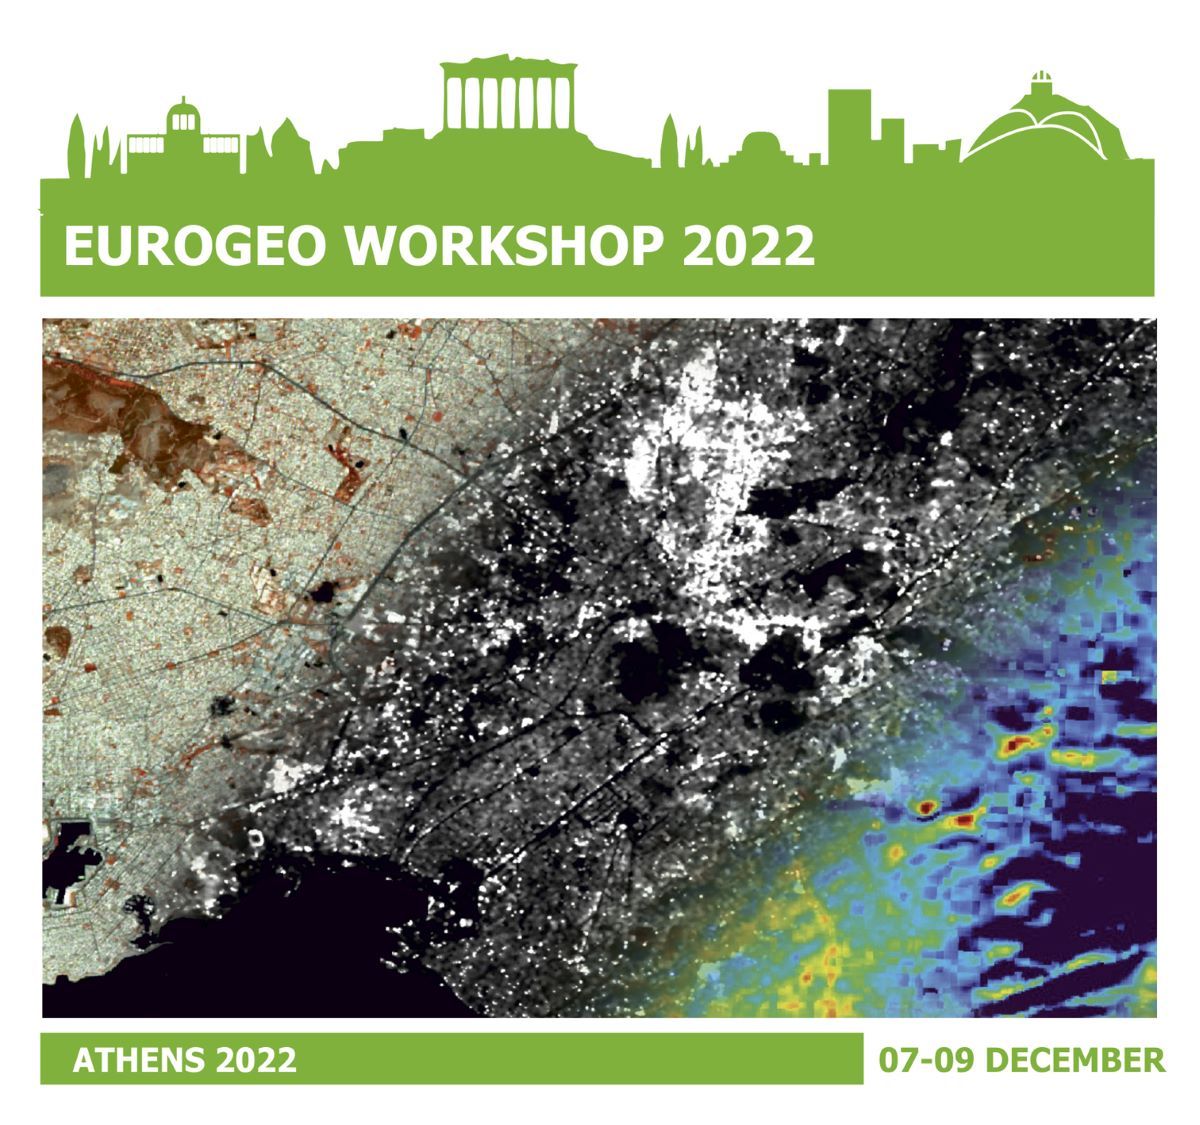 eurogeo workshop 2022 event poster